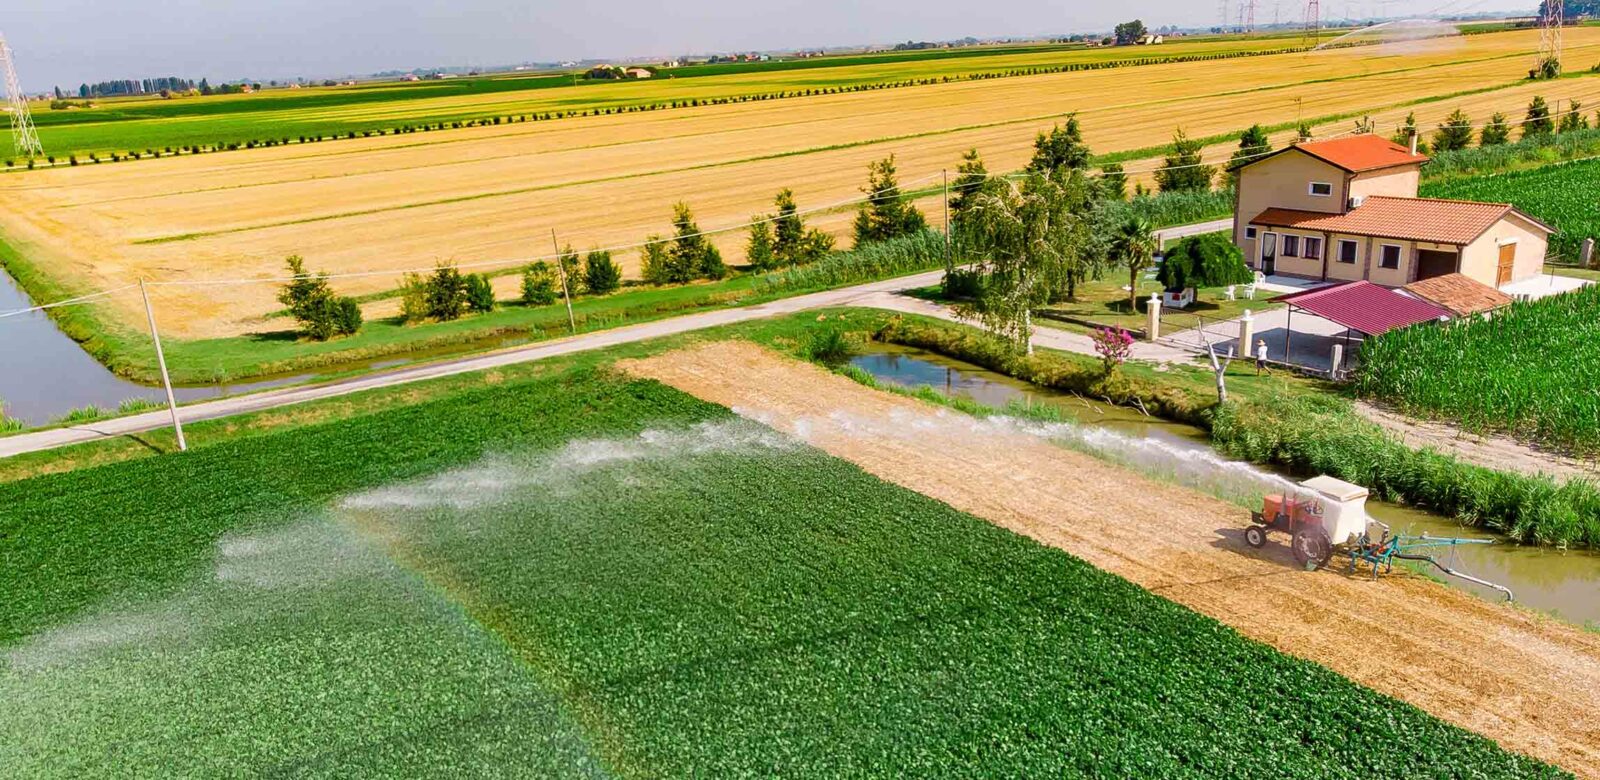 Irrigating field